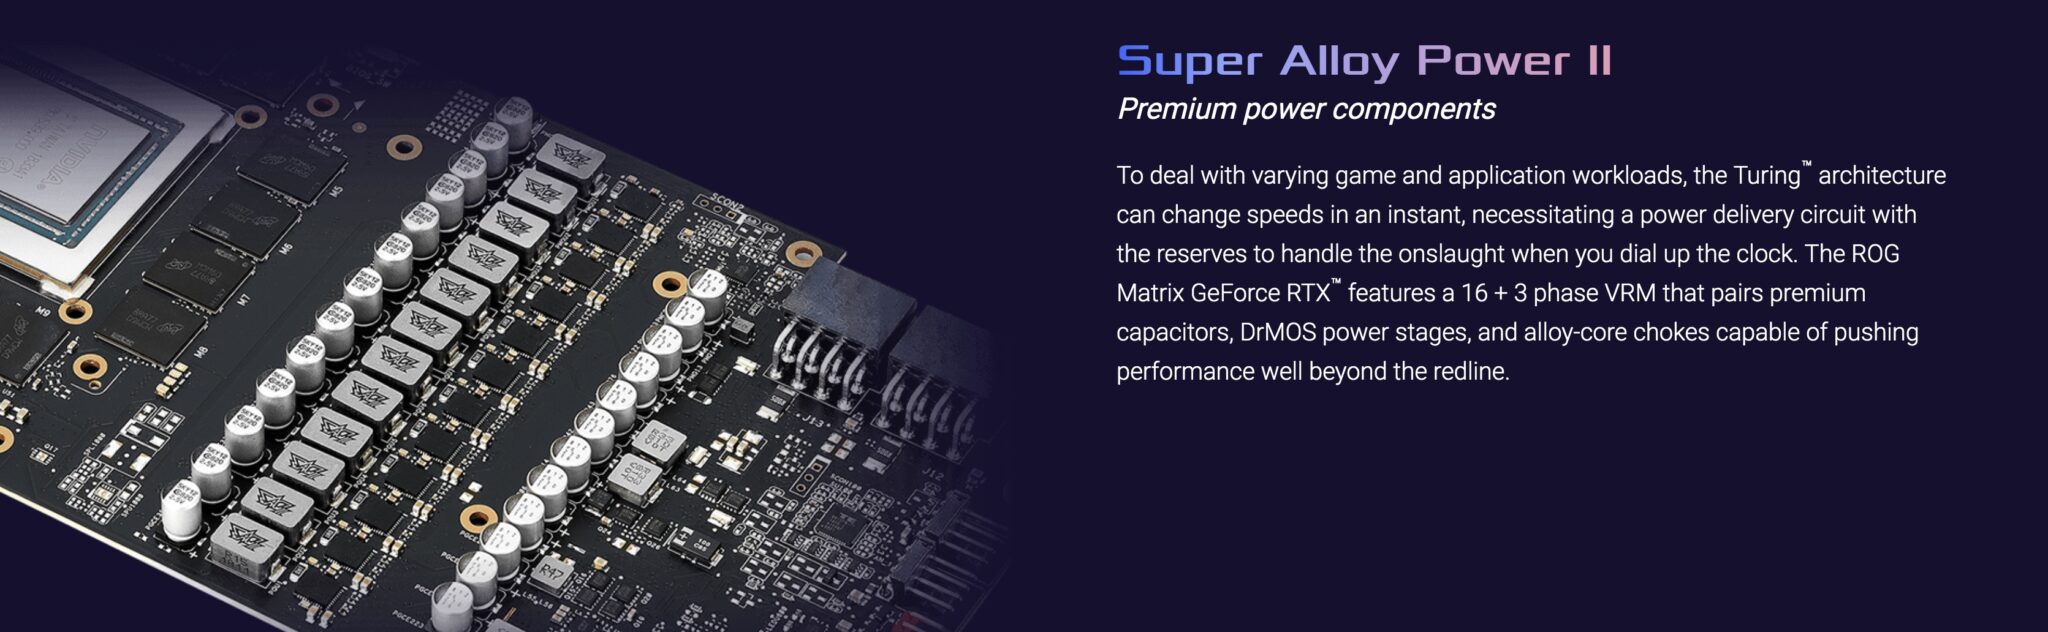 Asus presenta la ROG Matrix GeForce RTX 2080 Ti